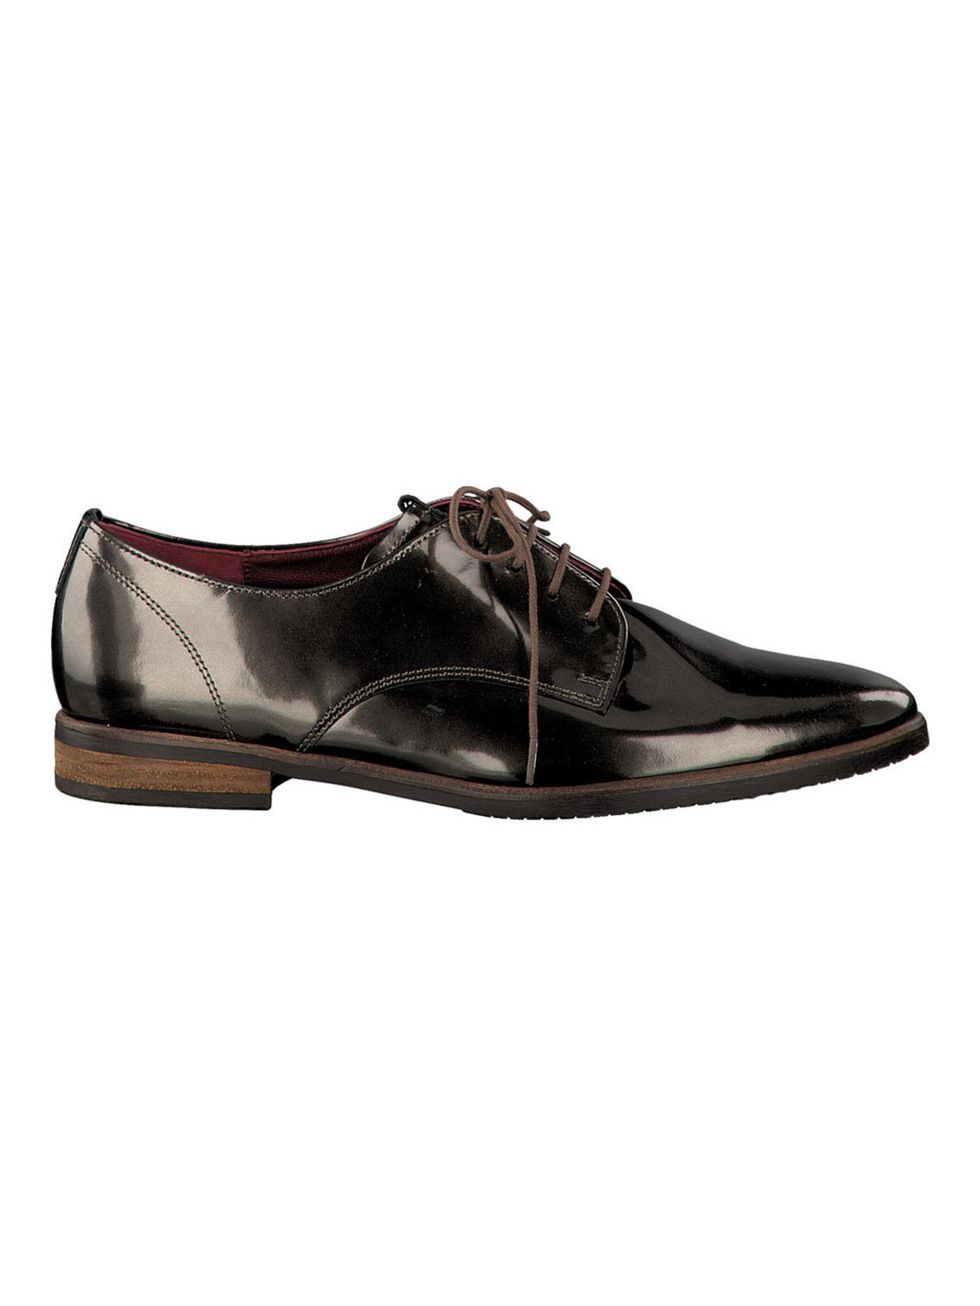 Footwear, Brown, Product, Shoe, Oxford shoe, Tan, Leather, Black, Dress shoe, Liver, 